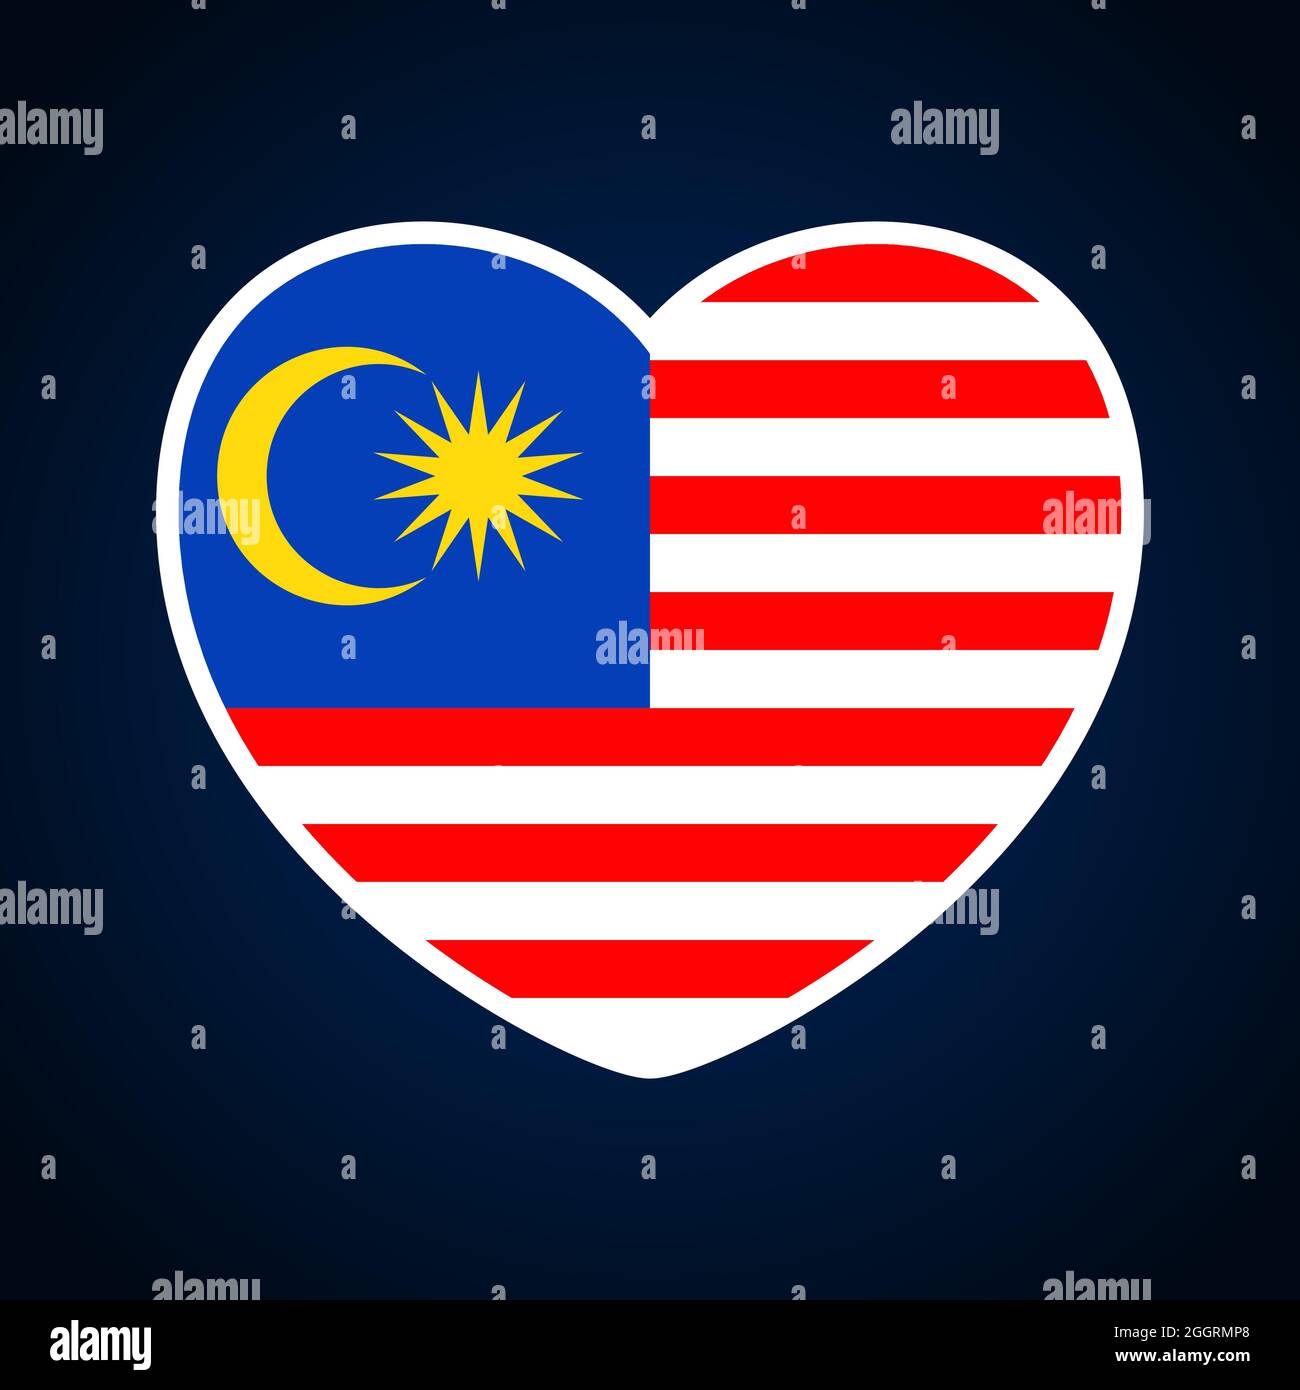 Bendera Malaysia Berbentuk Hati - RosskruwBanks